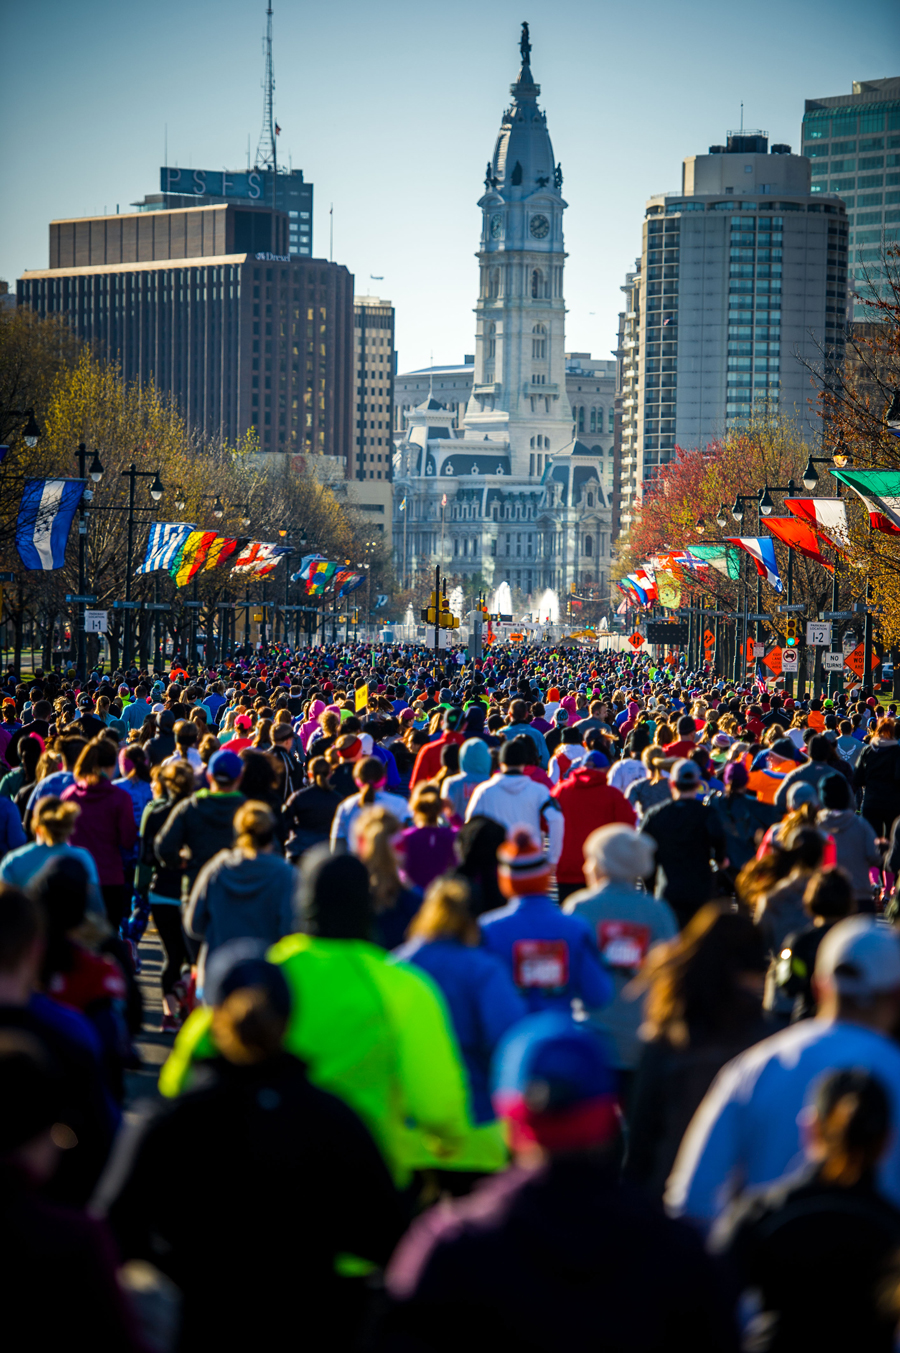 Philadelphia Love Run Half Marathon 2018 Motiv Running